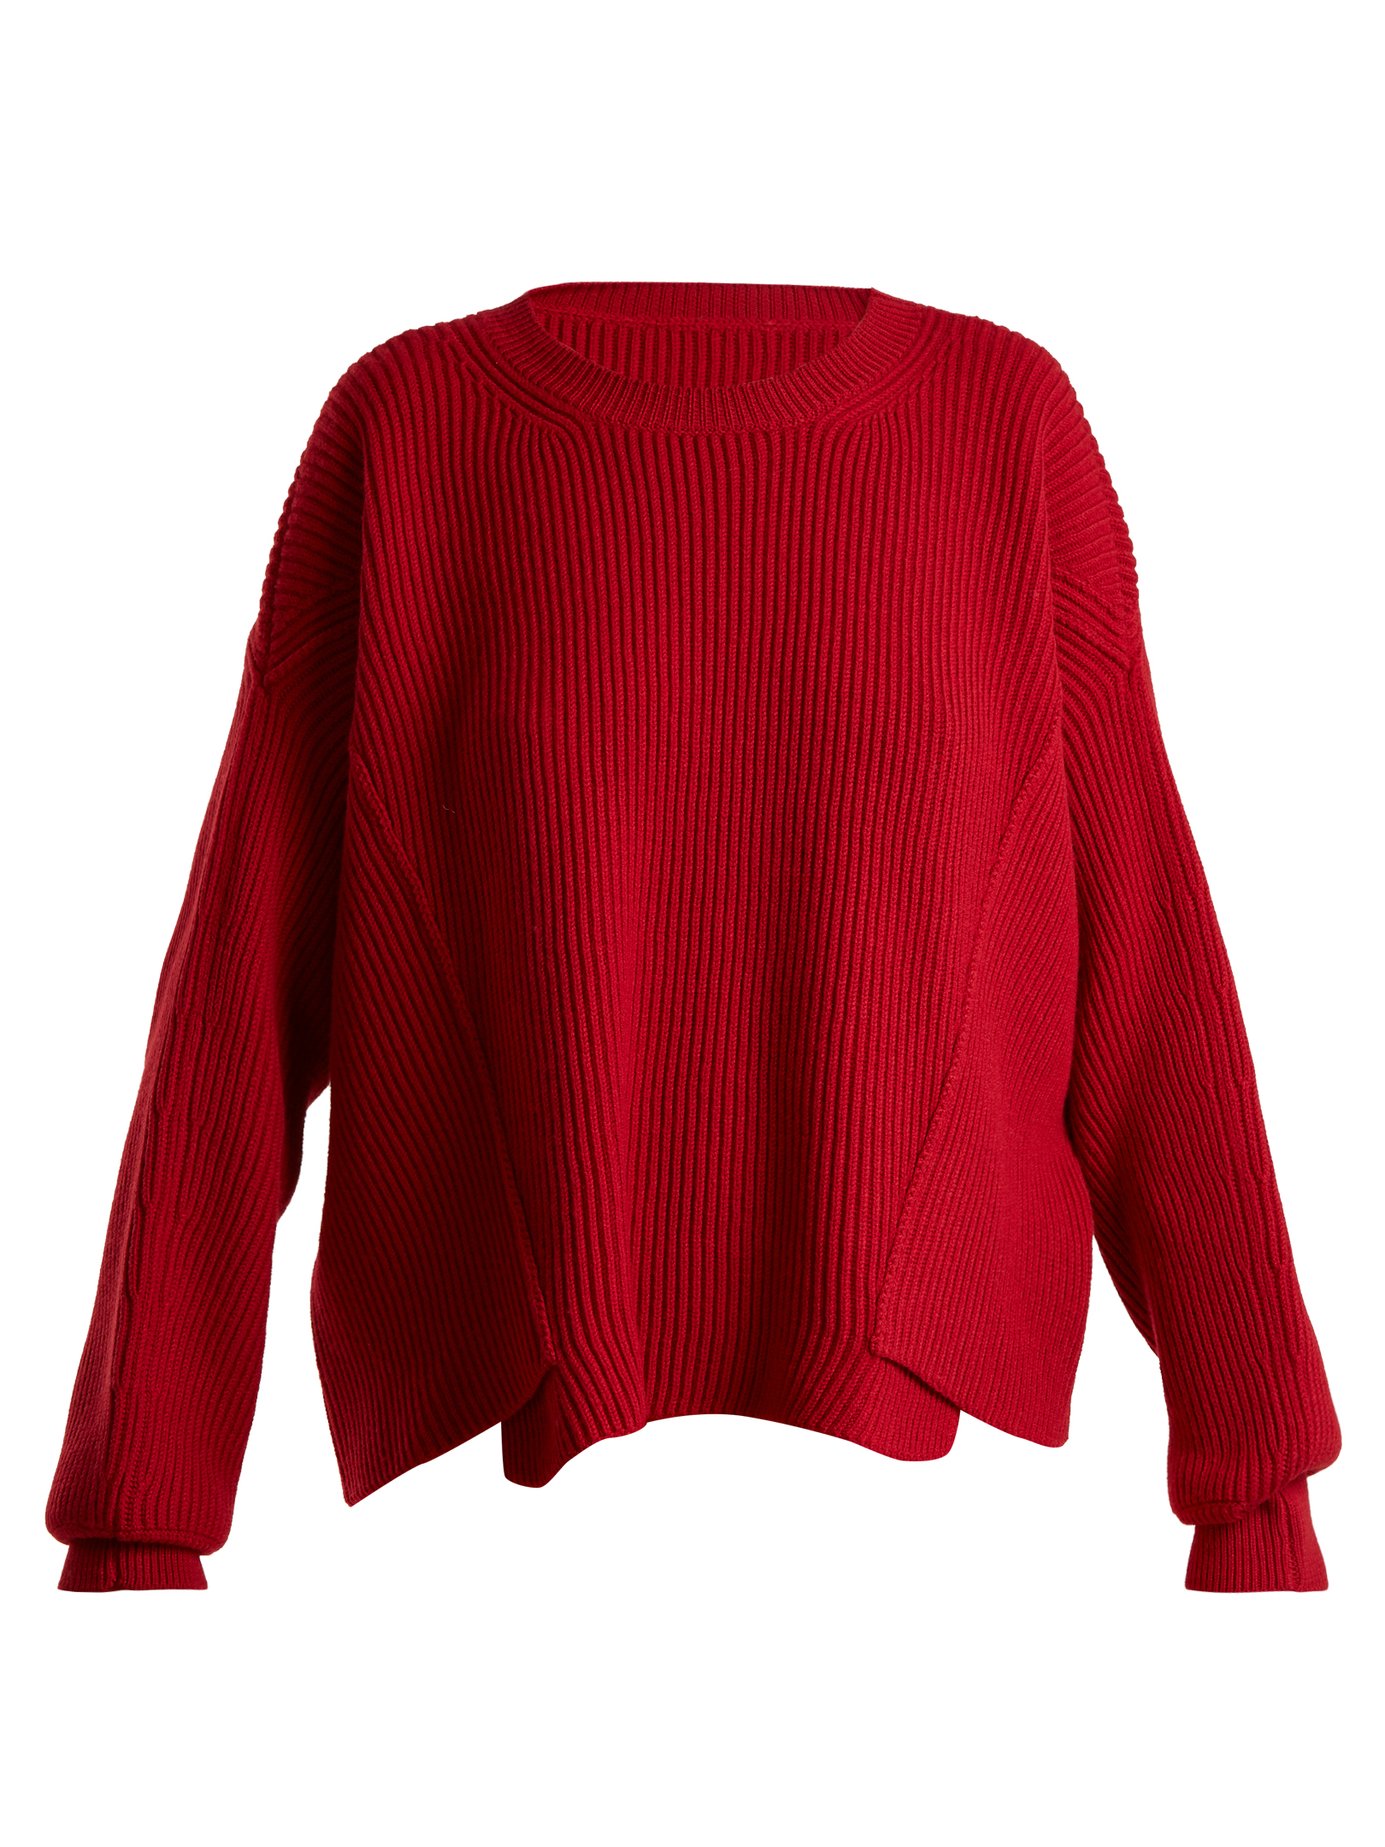 Asymmetric-hem ribbed-knit wool sweater, $795.0